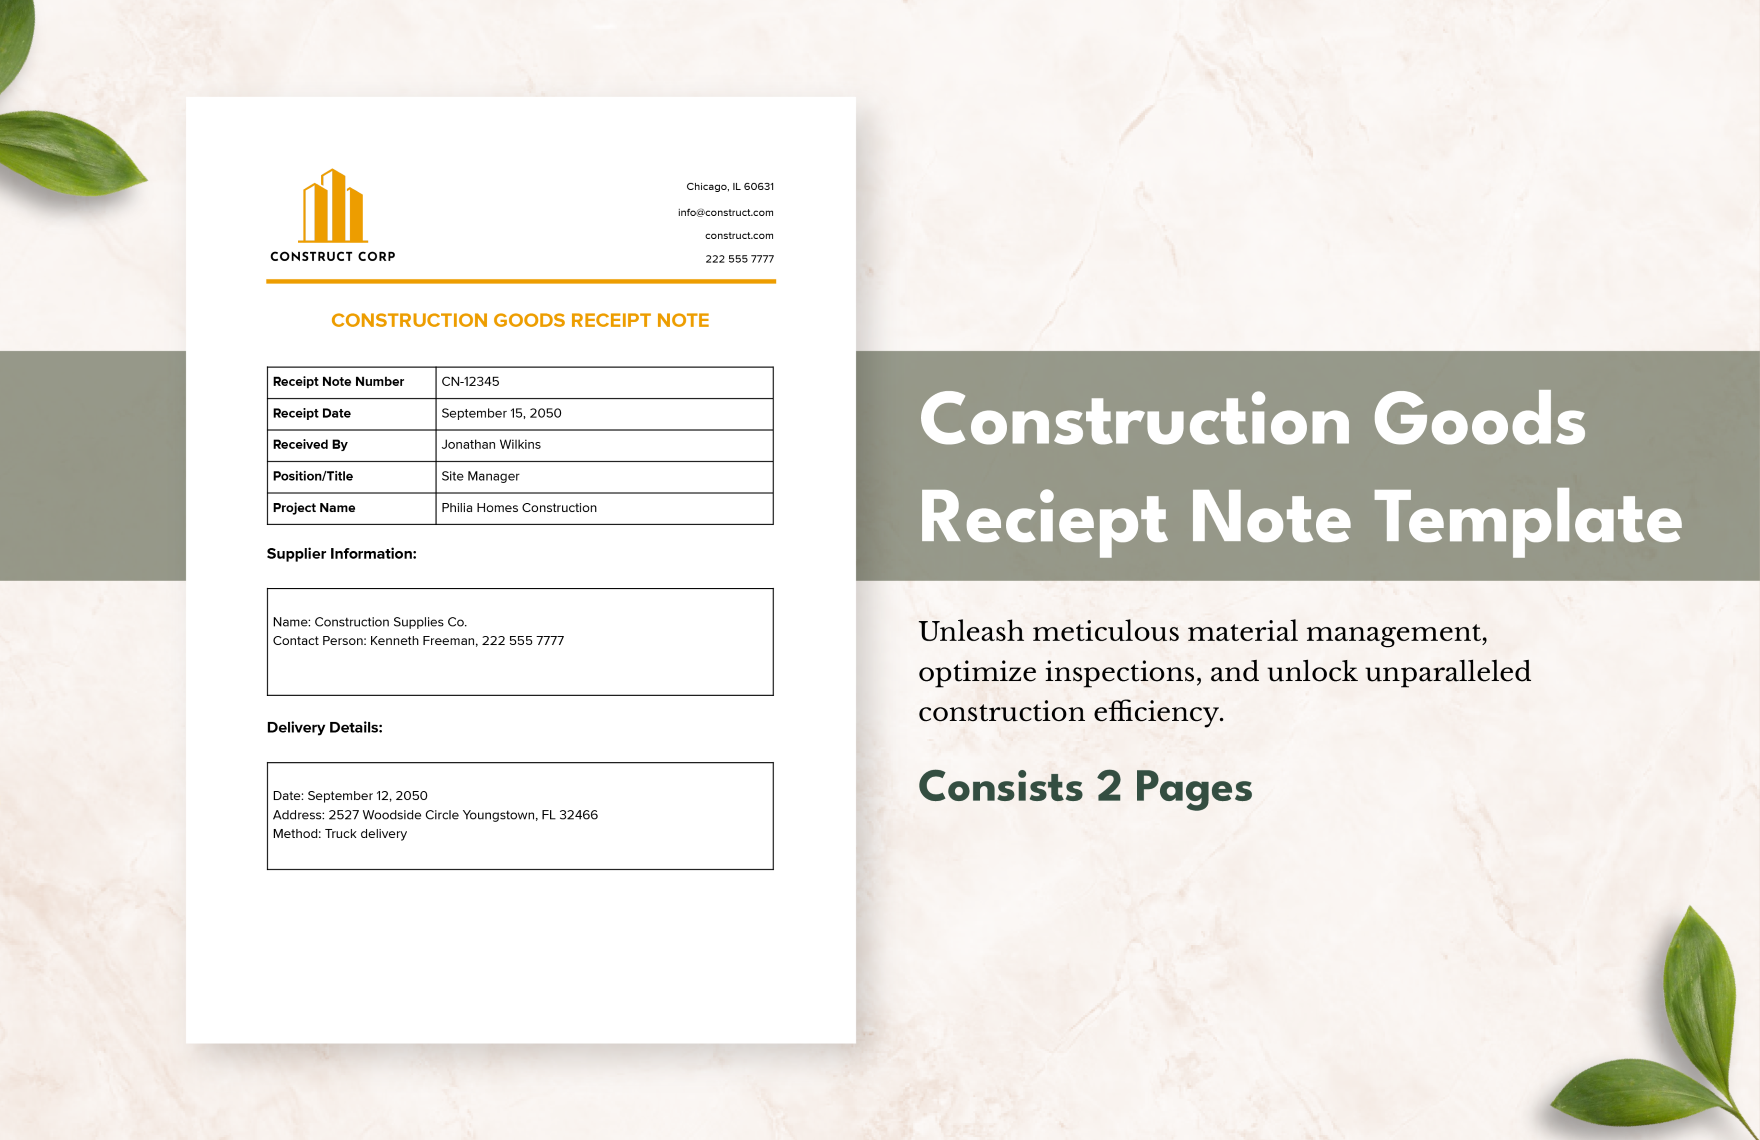 Construction Goods Receipt Note Template